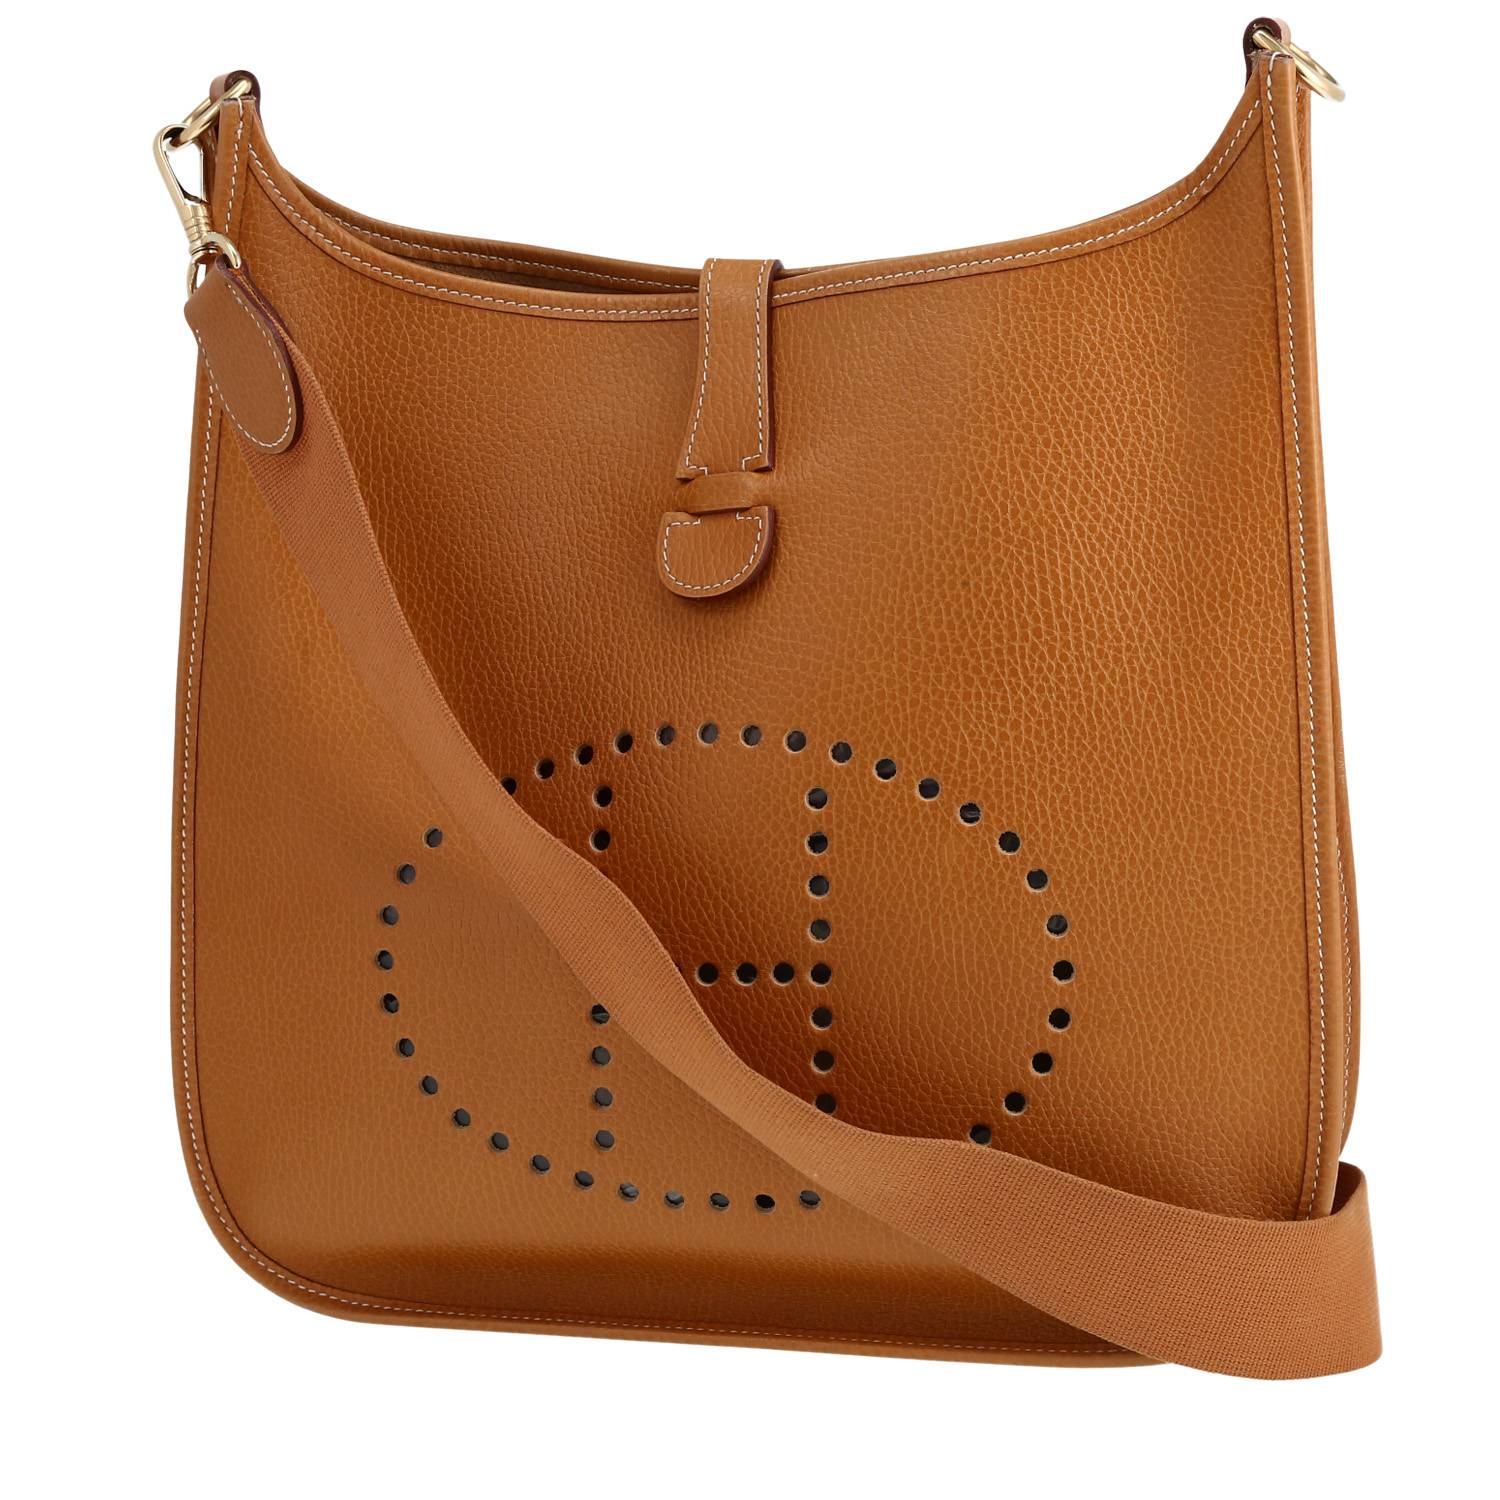 00pp-hermes-evelyne-large-model-handbag-in-gold-ardenne-leather.jpg